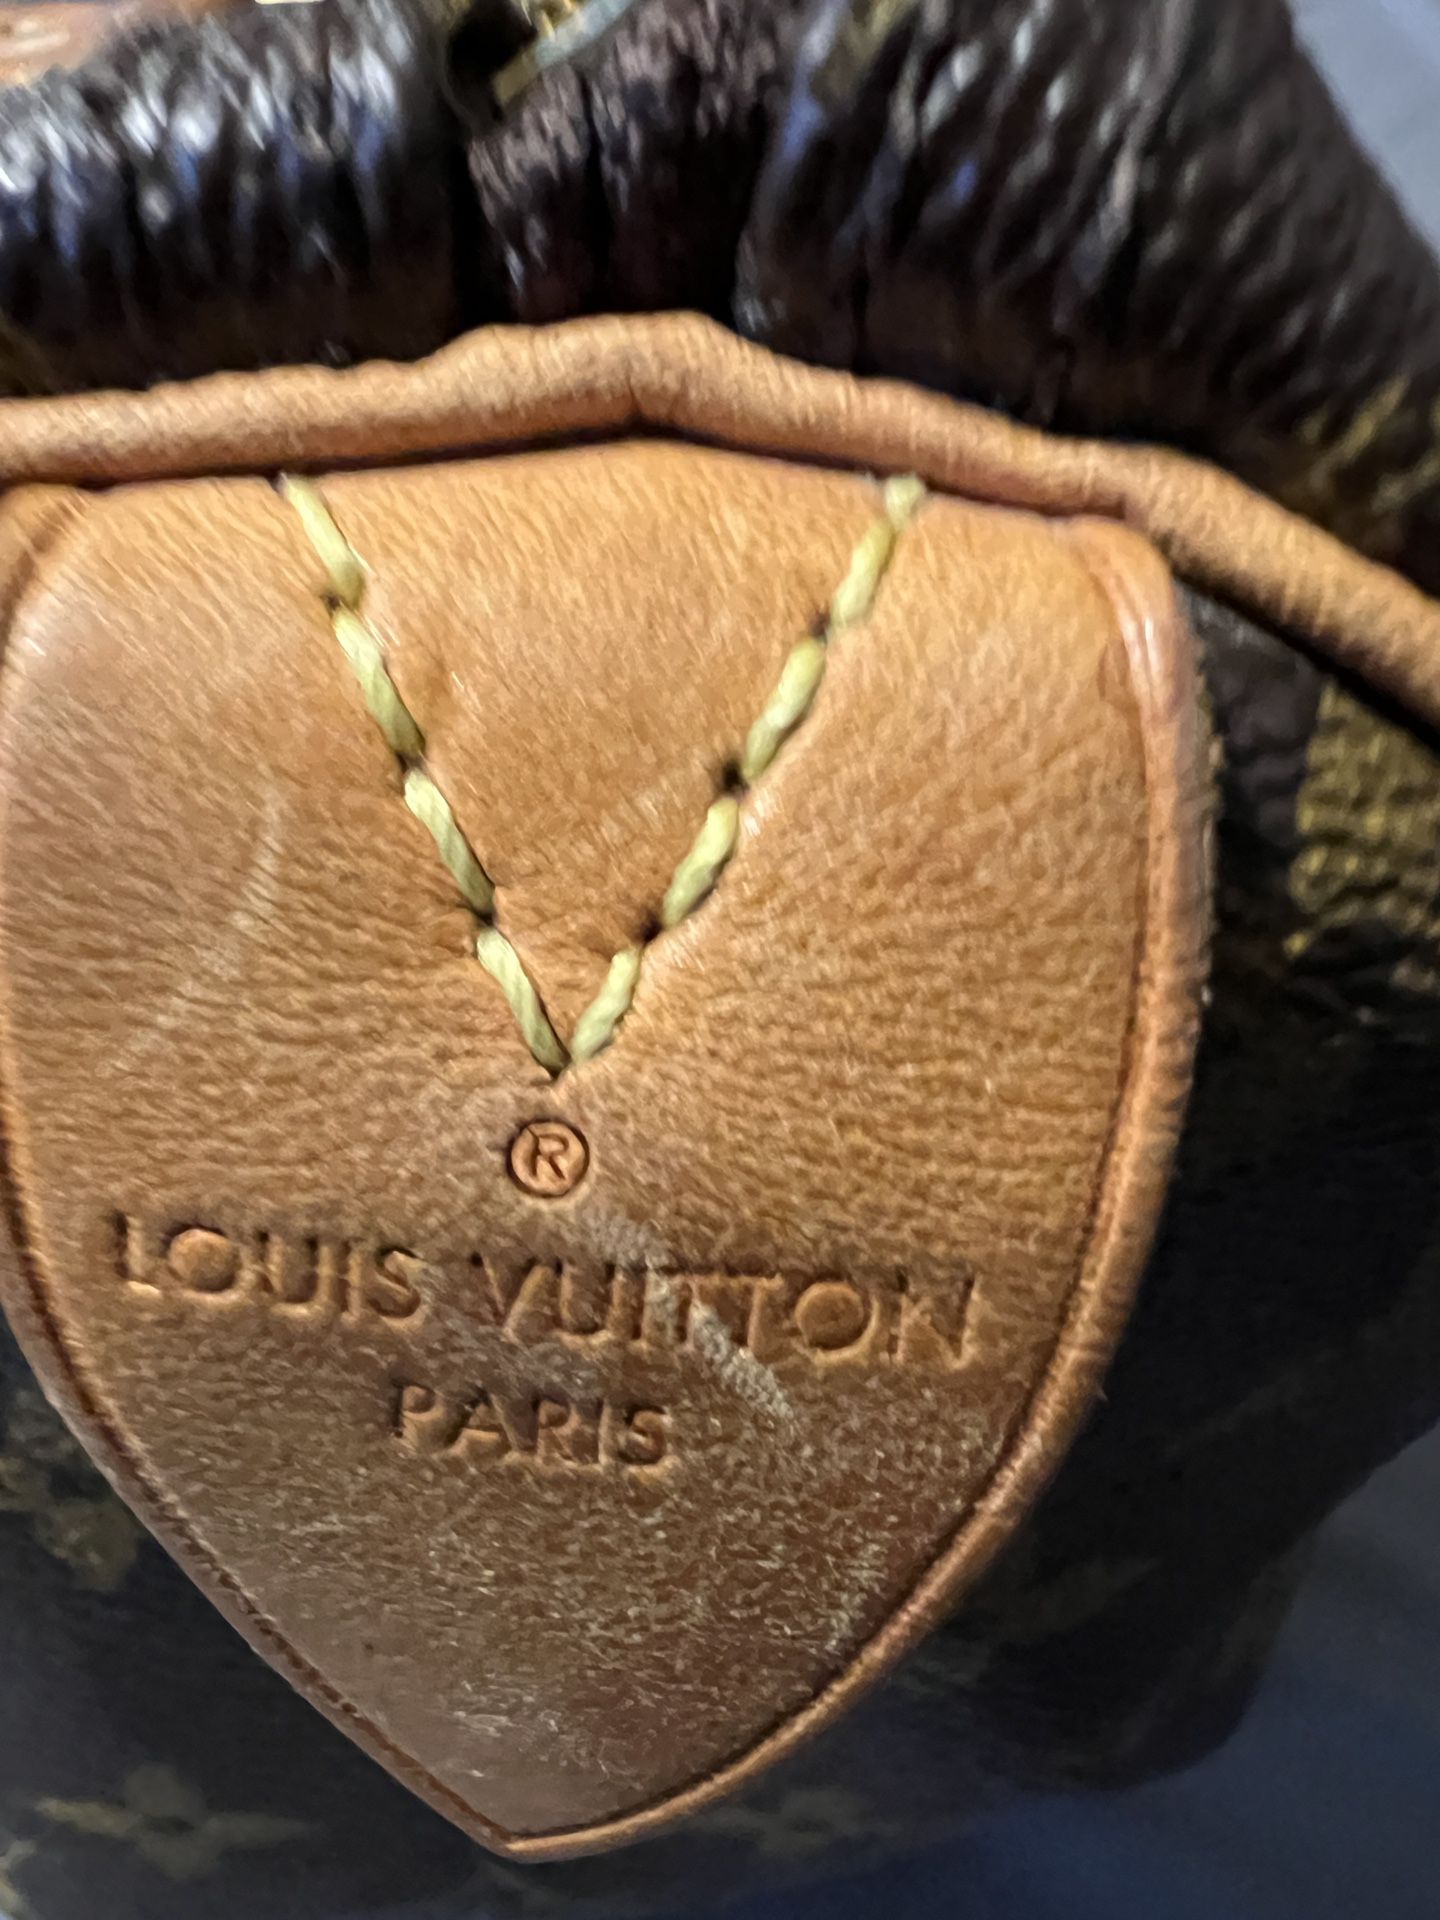 Louis Vuitton Speedy 30 Purse - authentic for Sale in San Antonio